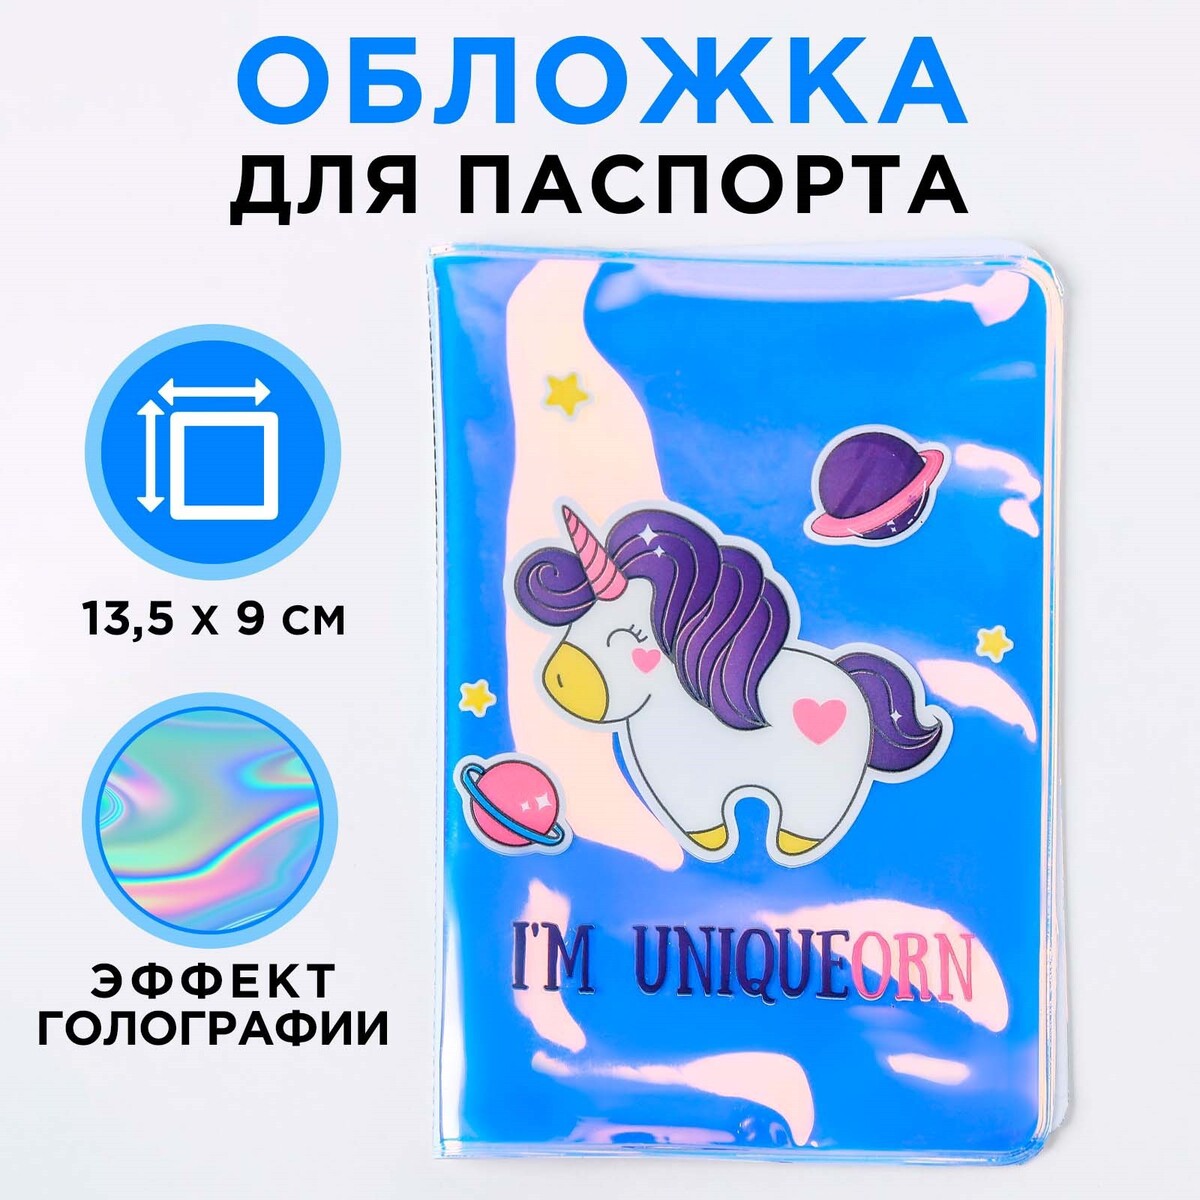 Обложка на паспорт обложка на паспорт мрамор серая